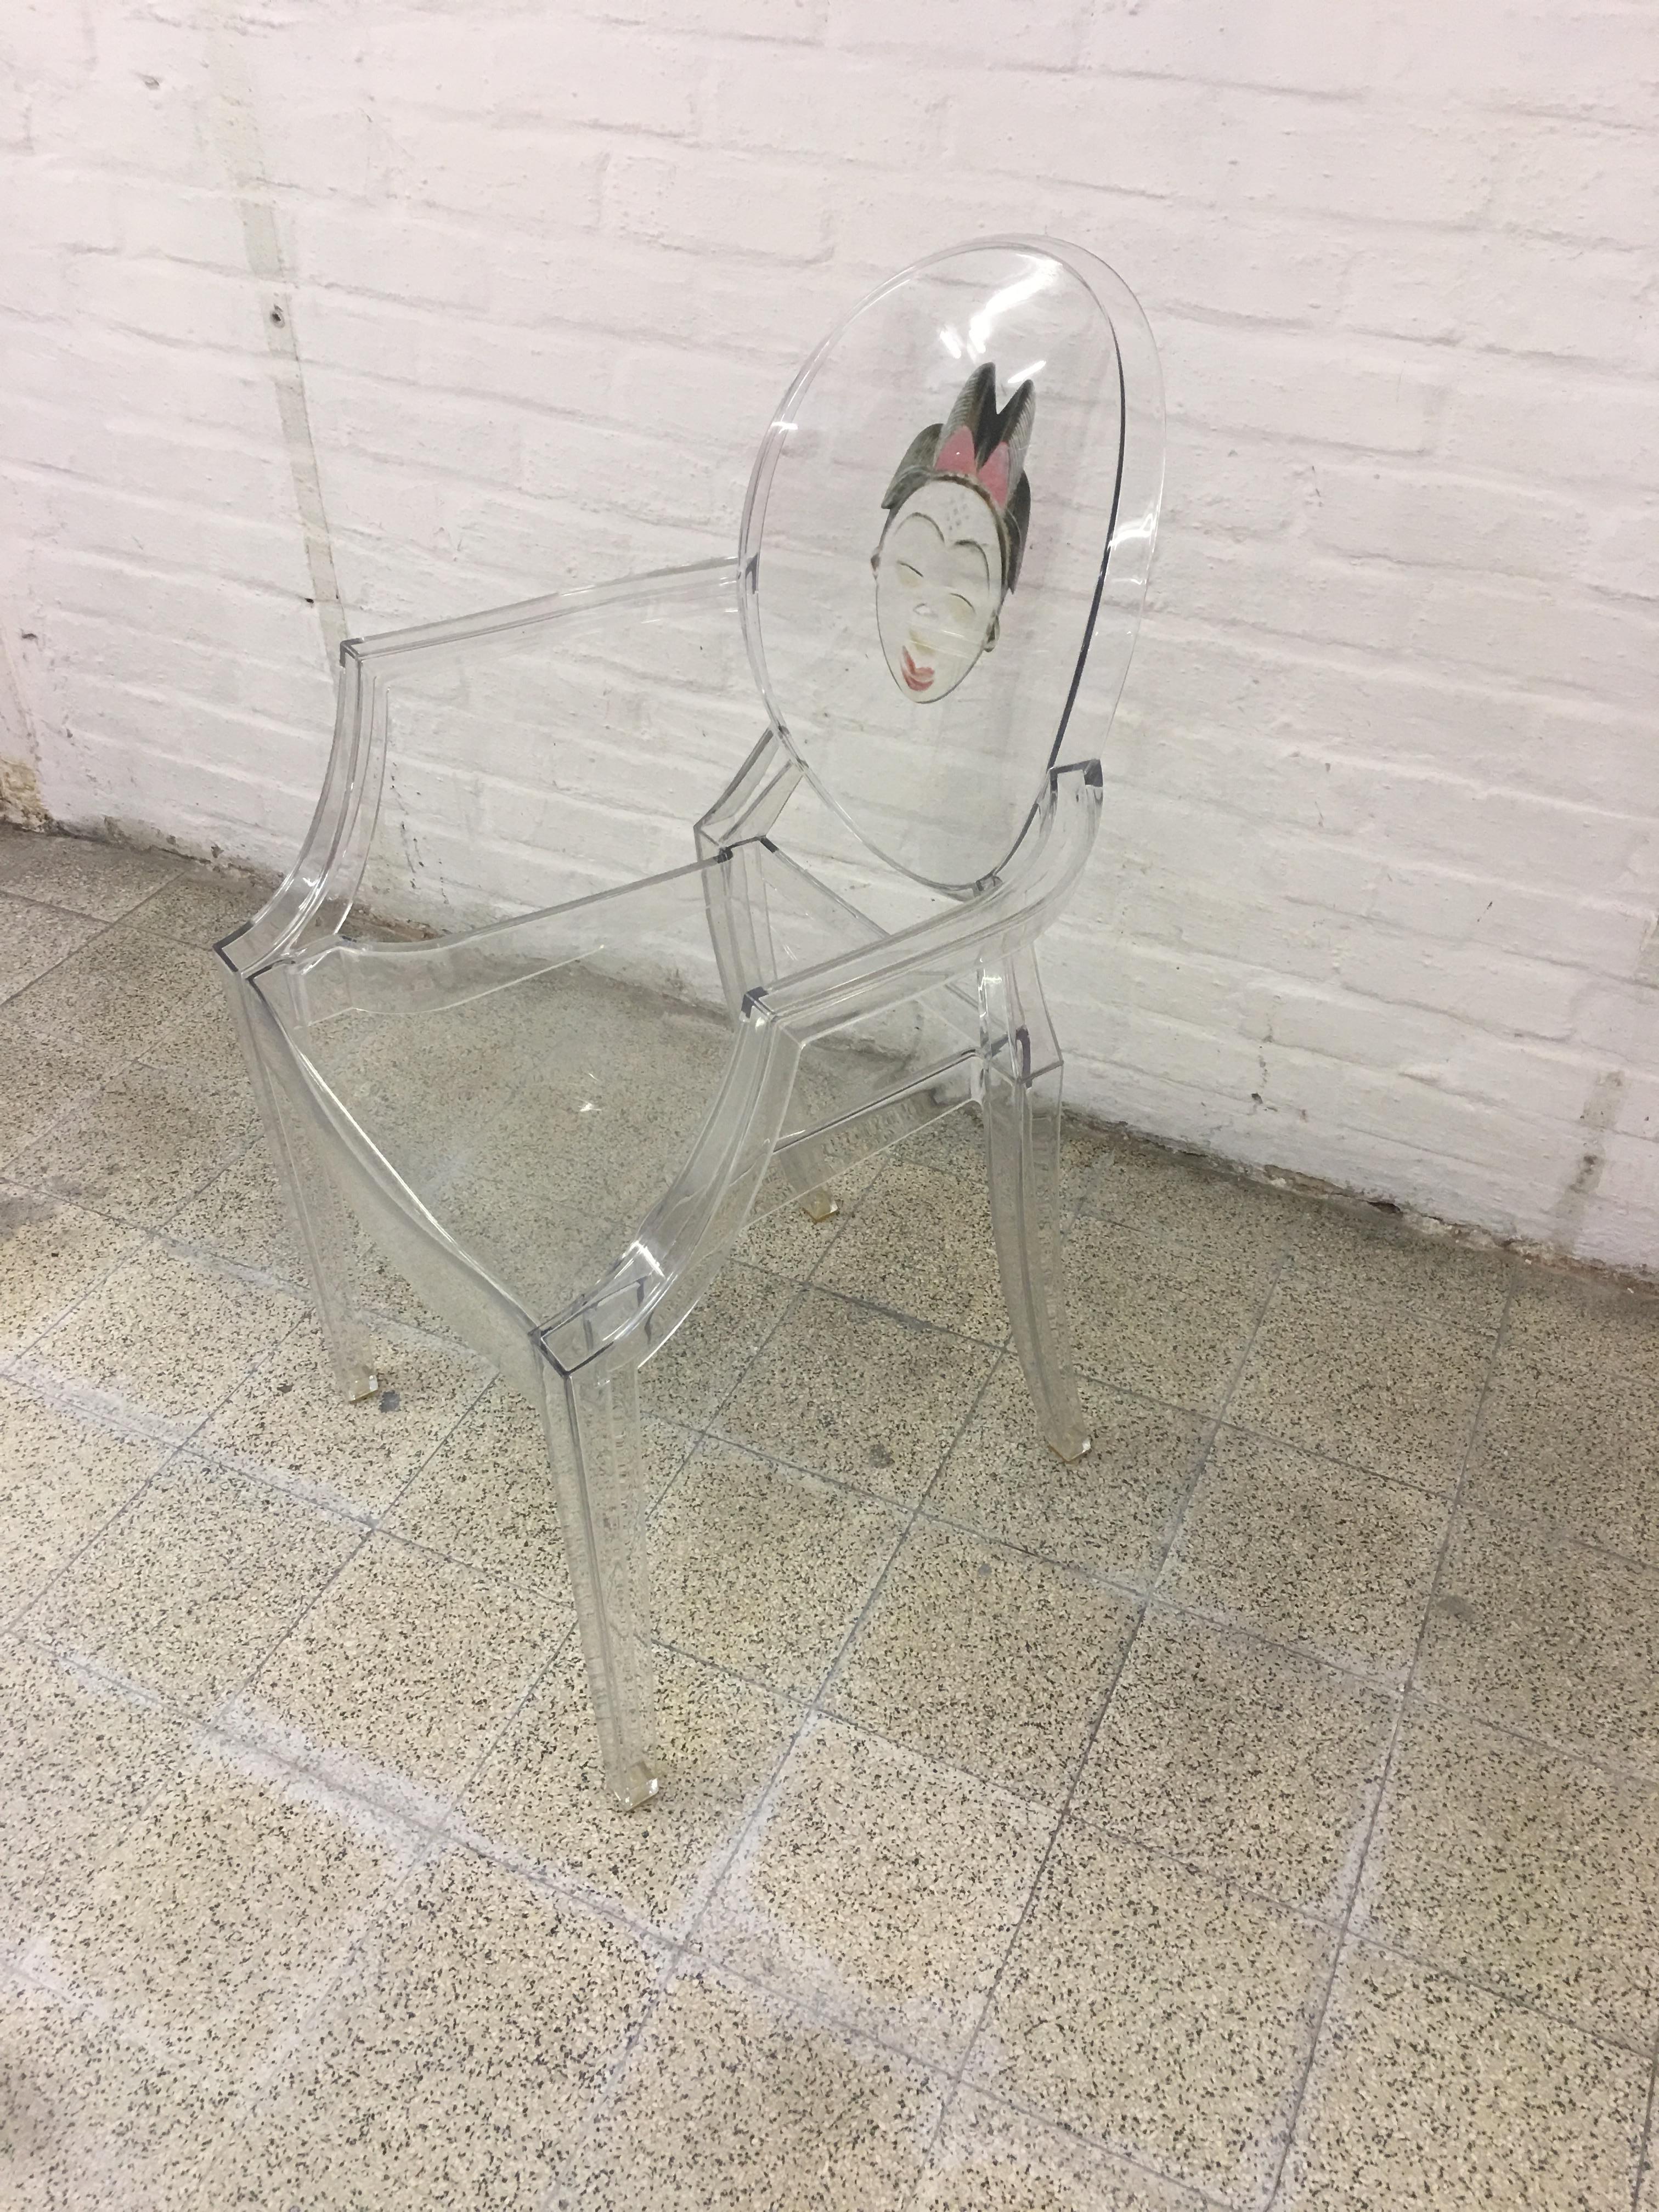 louis ghost chair